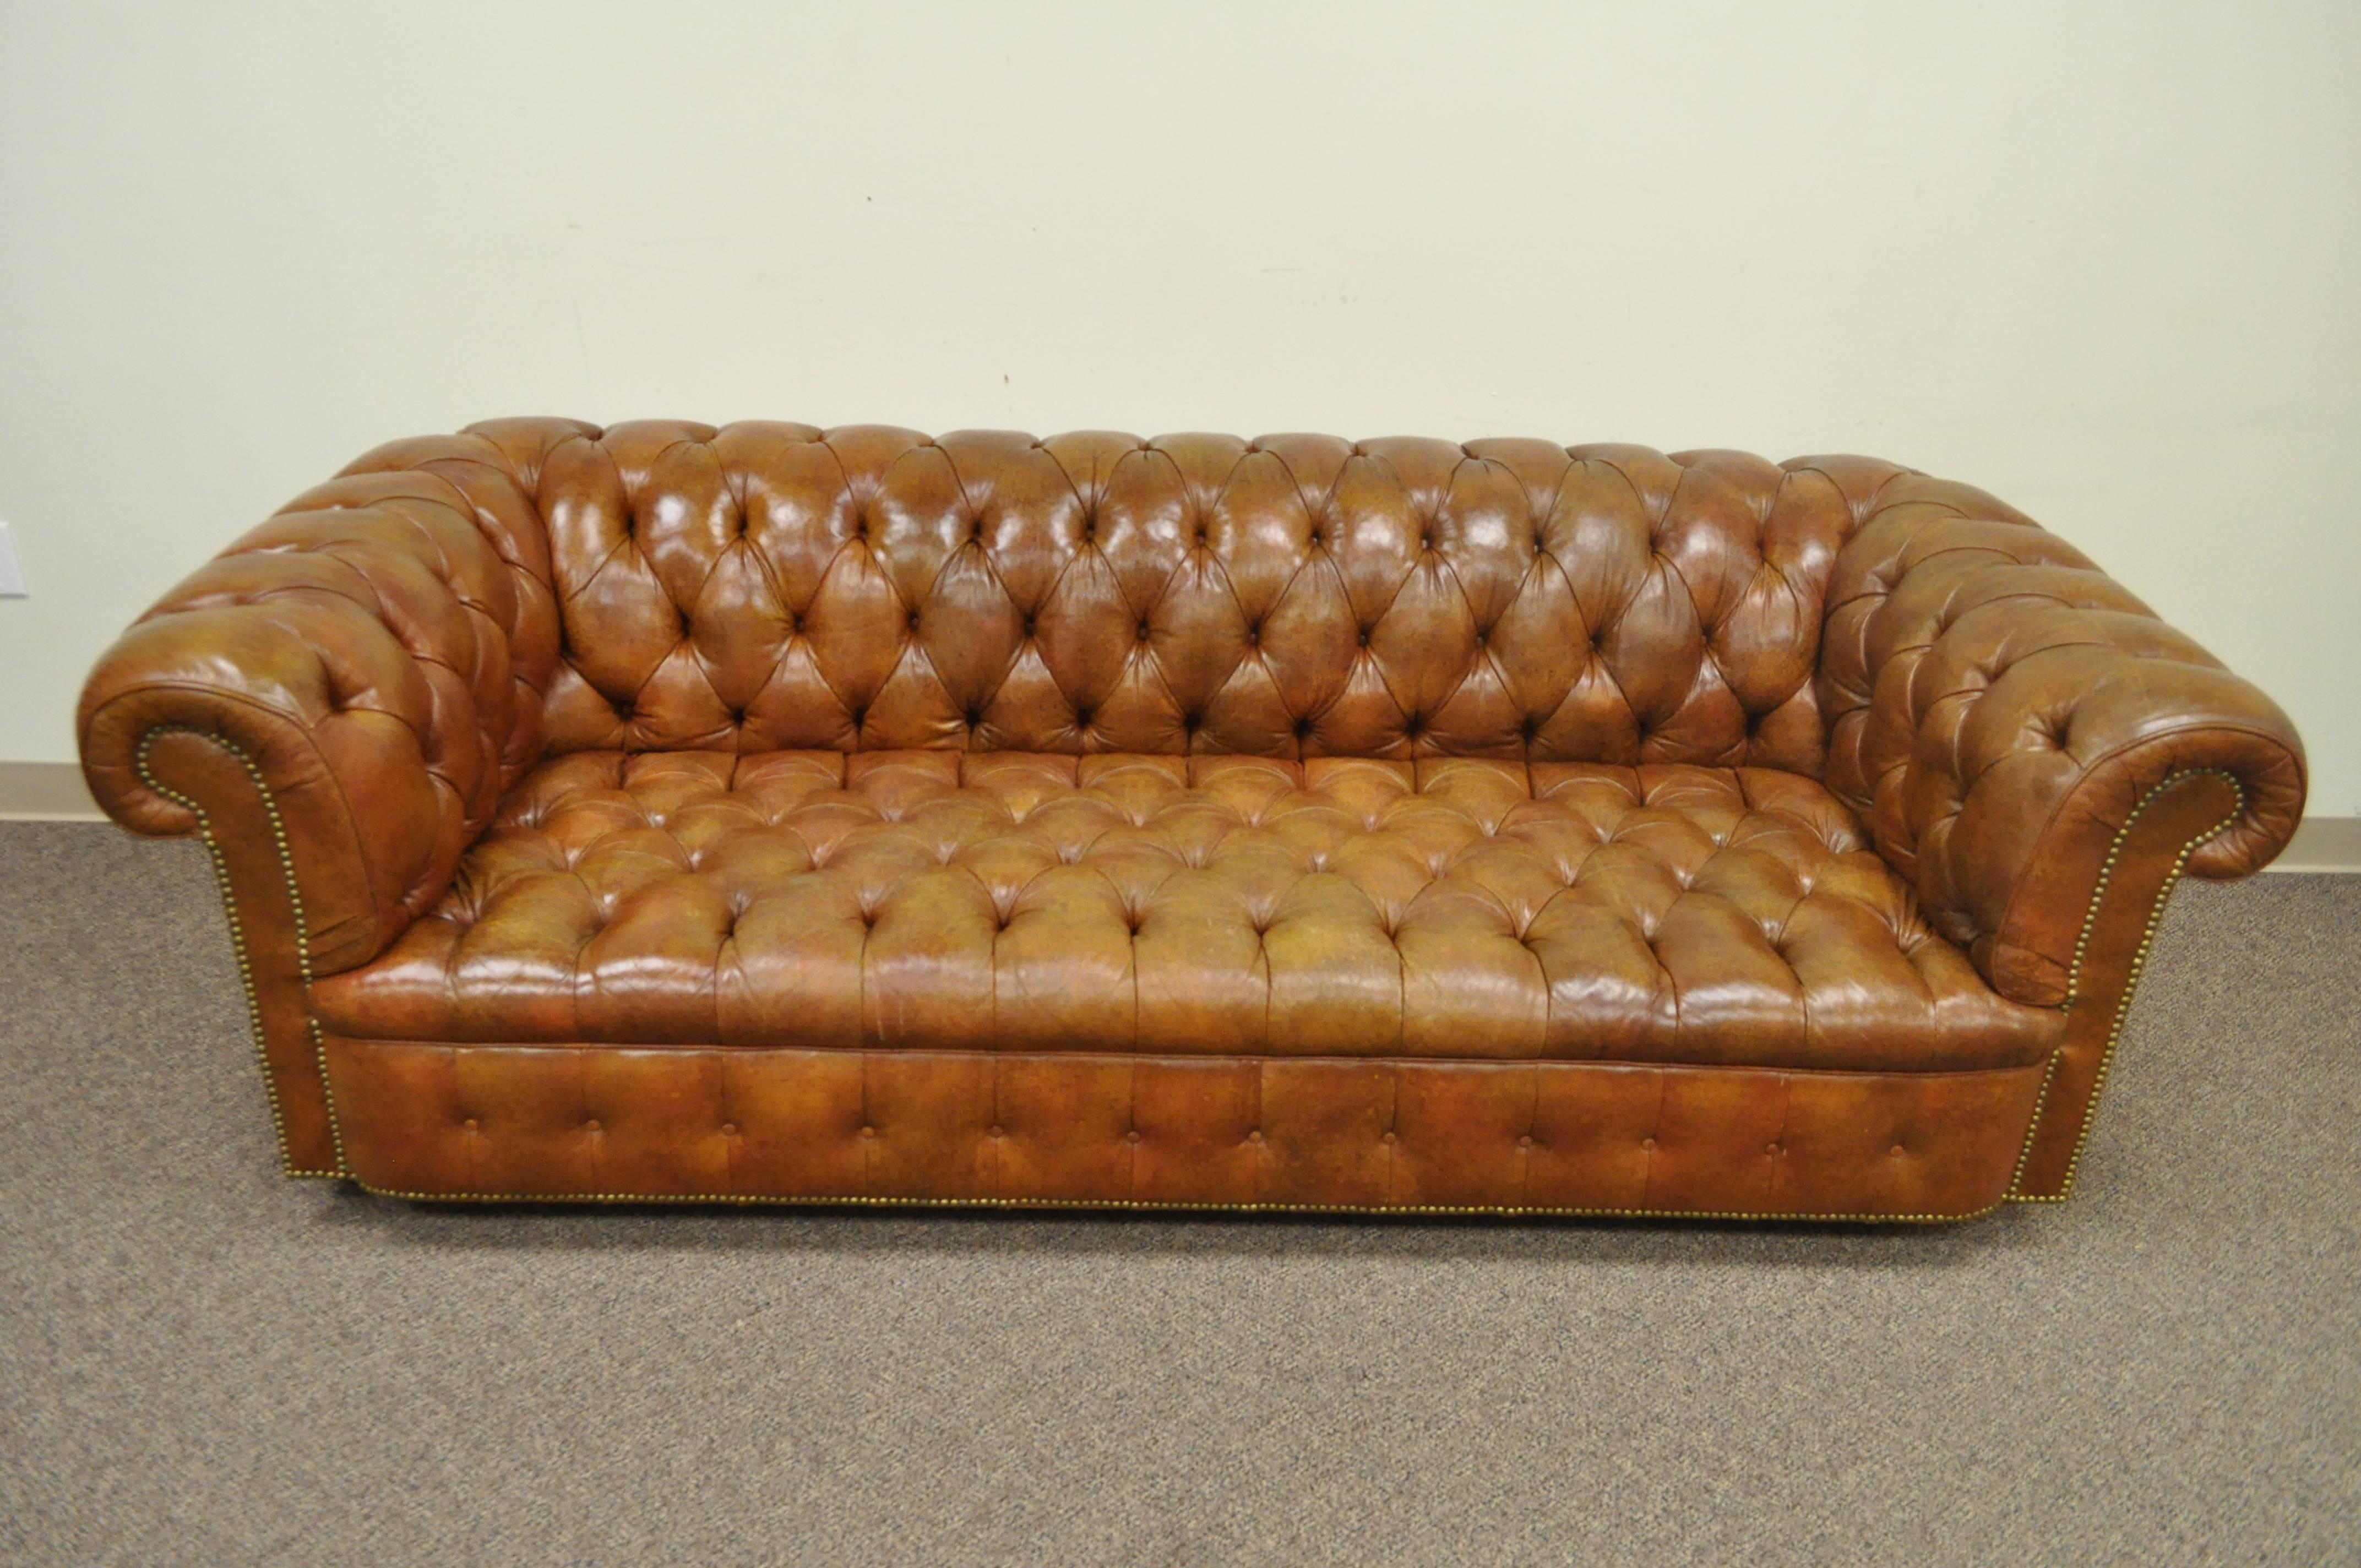 henredon leather sofa